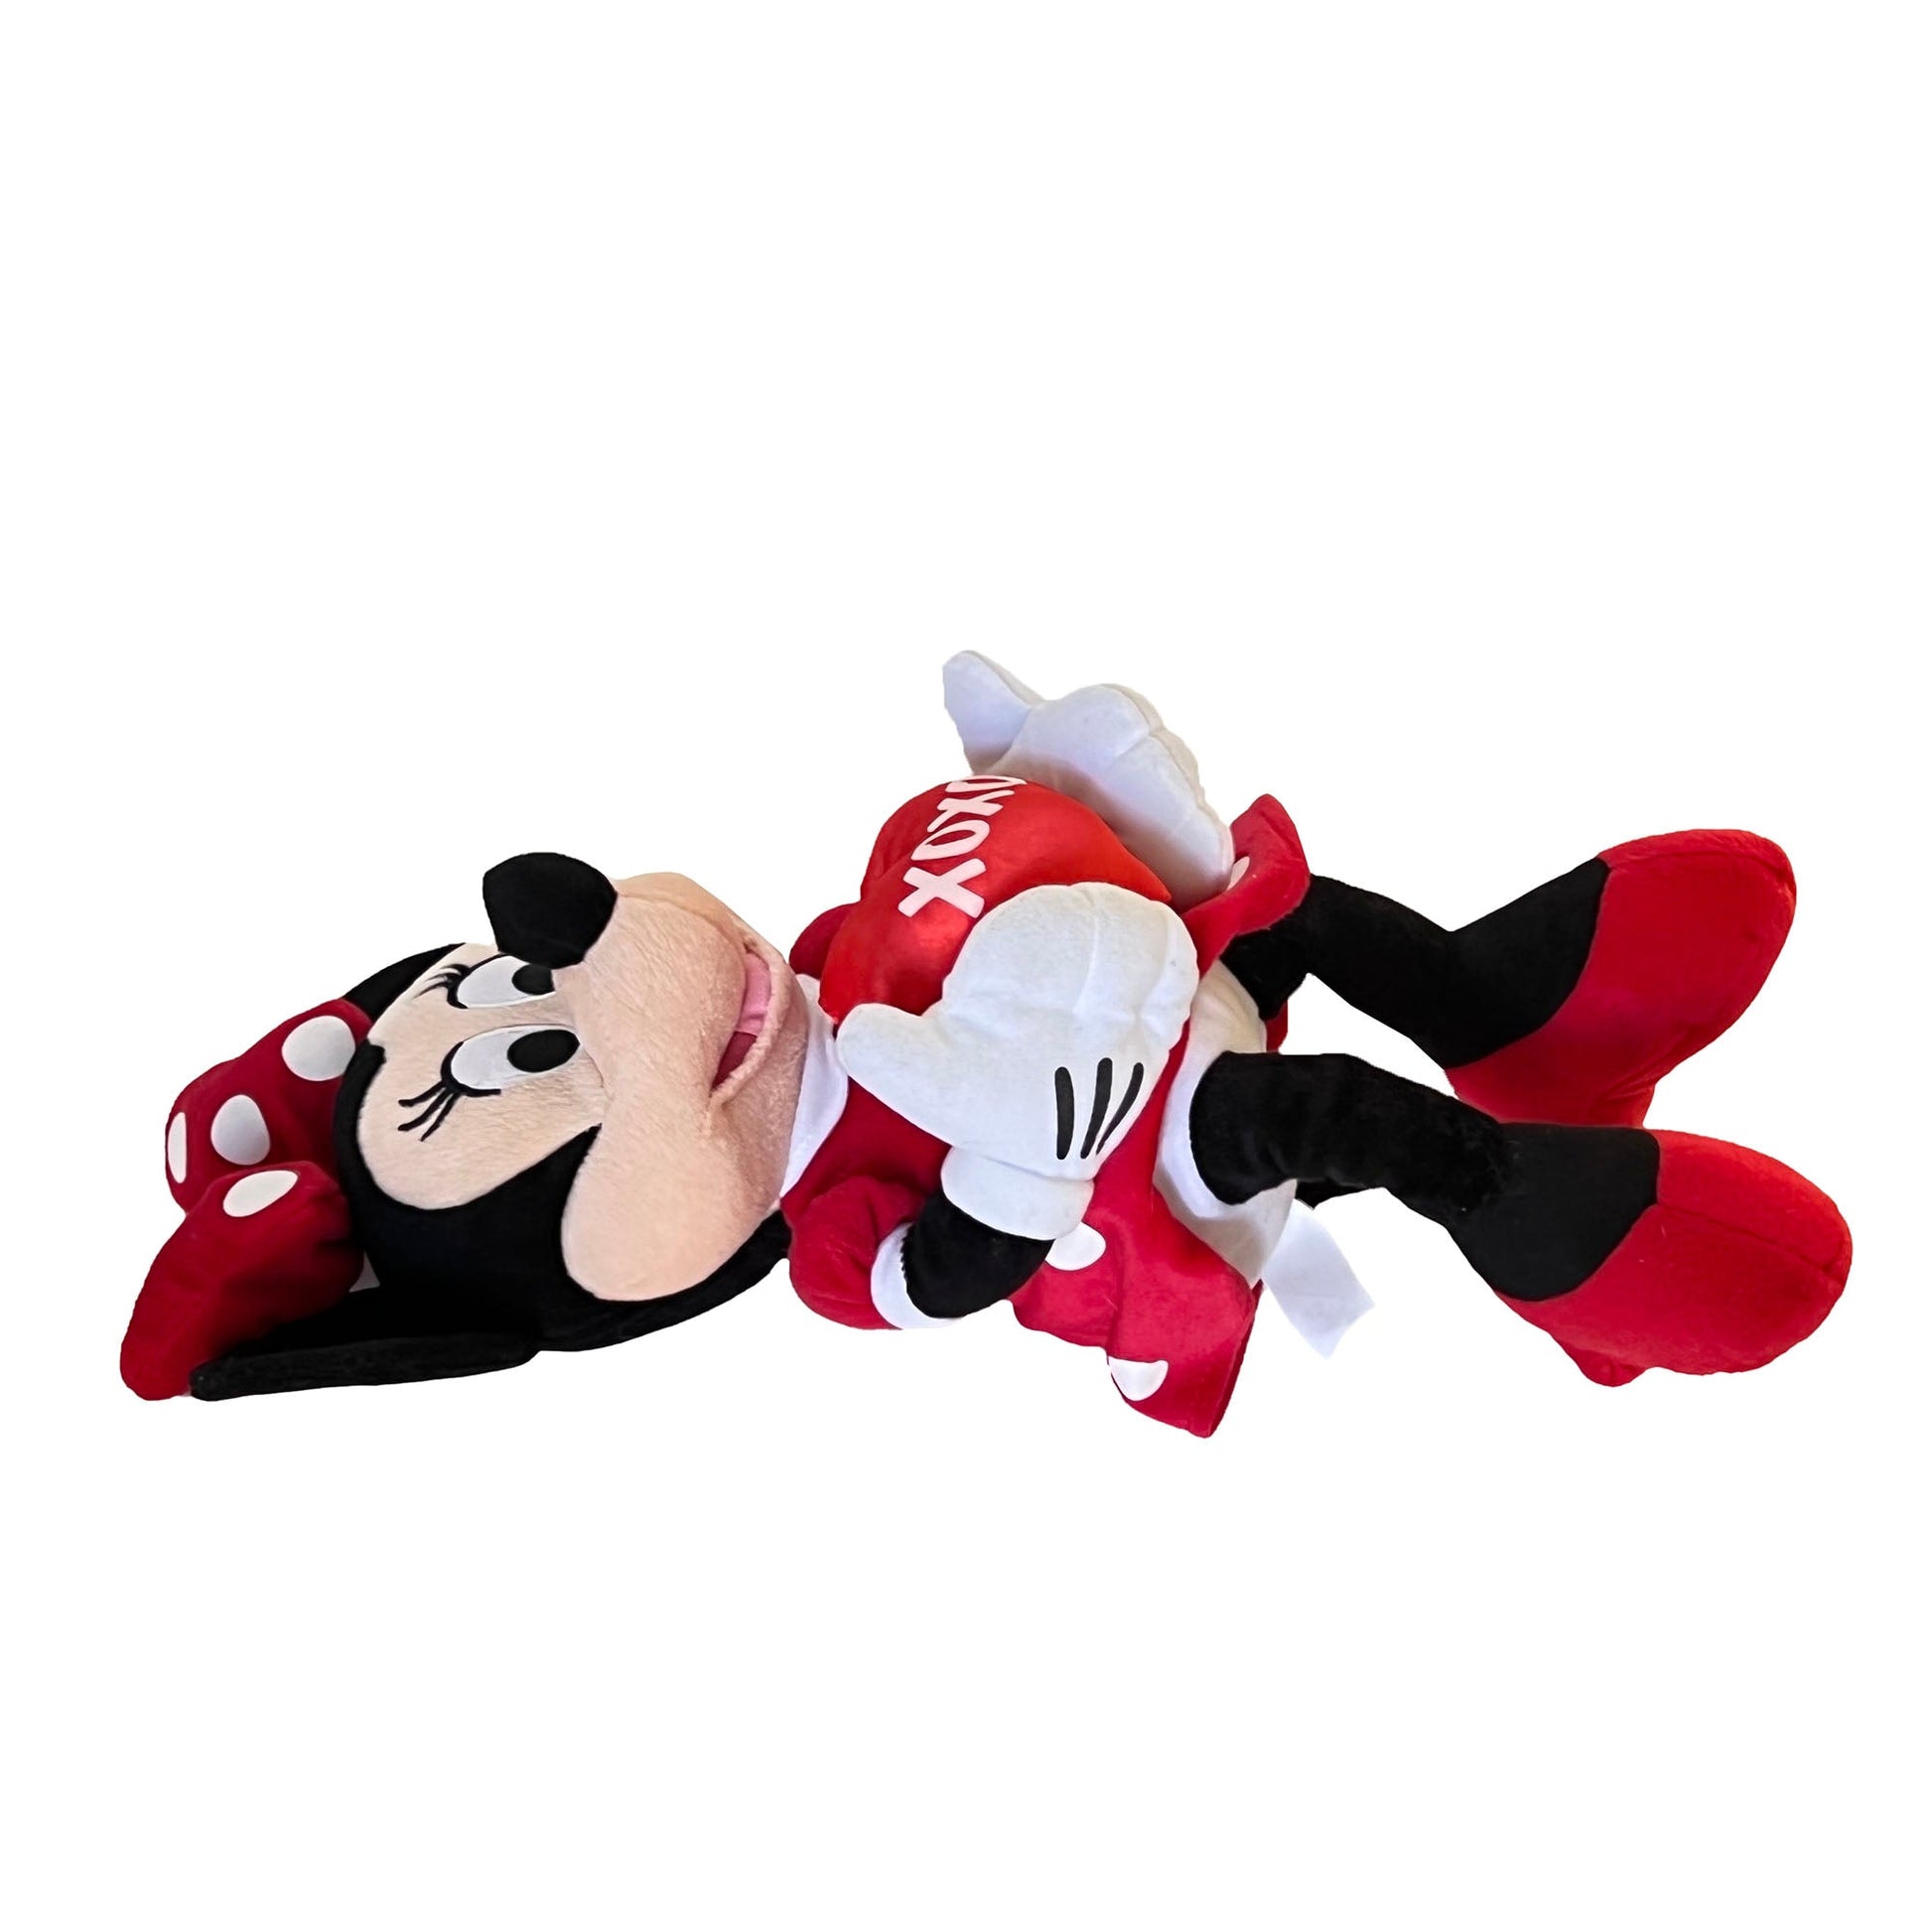 Disney-Minnie-Mouse-Plush-Stuffed-Animal.-Full-view.-2-Shop-eBargainsAndDeals